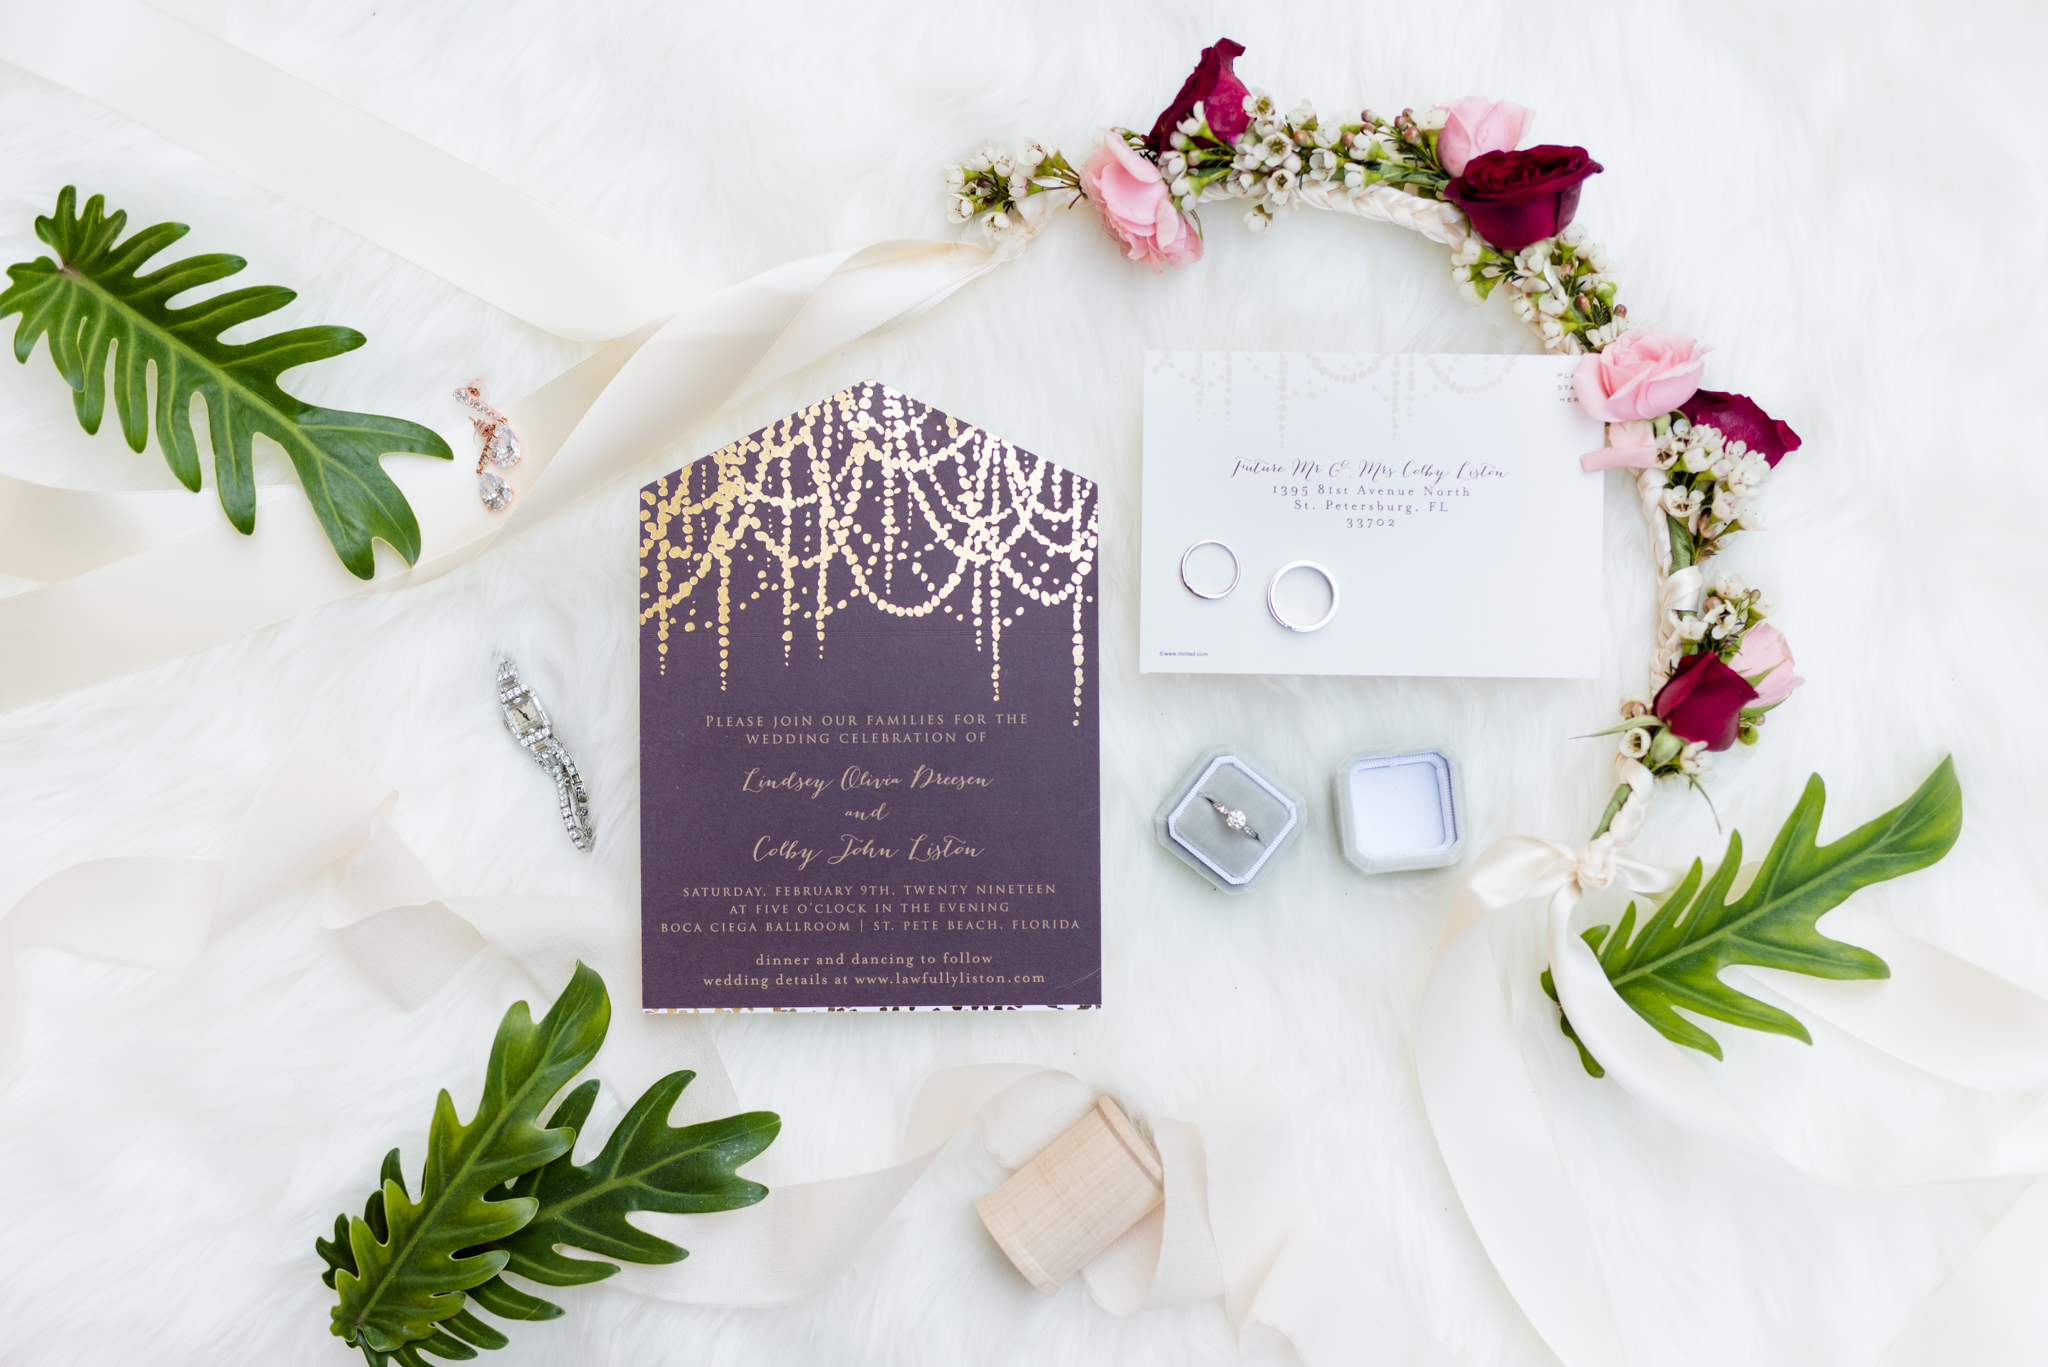 Wedding invitation and florals.